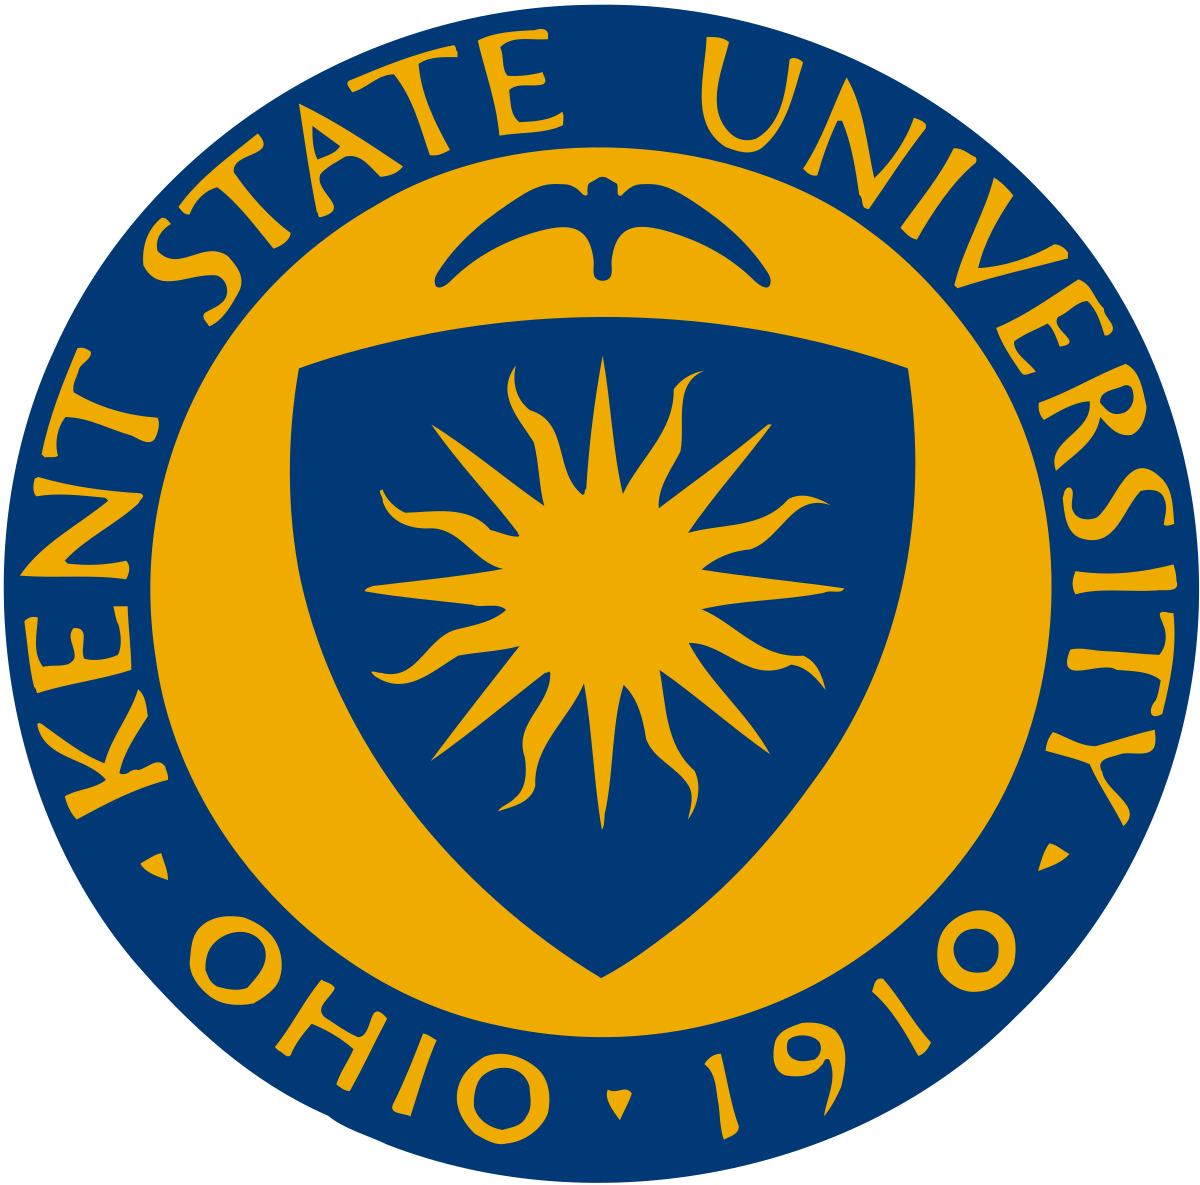 Kent State University Logo - Kent State University